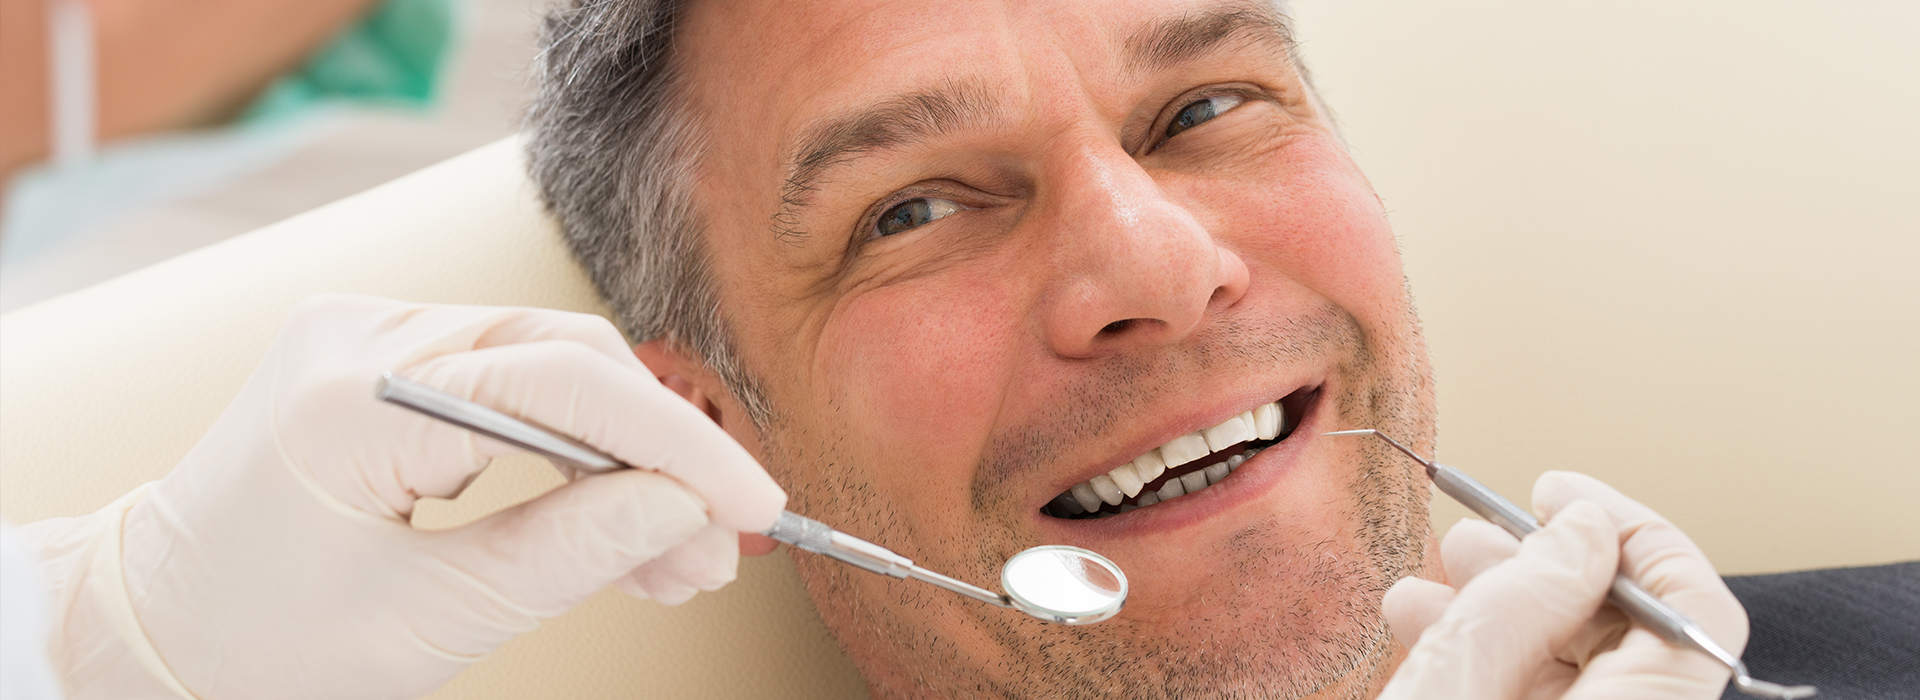 St. John Smiles Family Dentistry | Teeth Whitening, Sports Mouthguards and Preventative Program